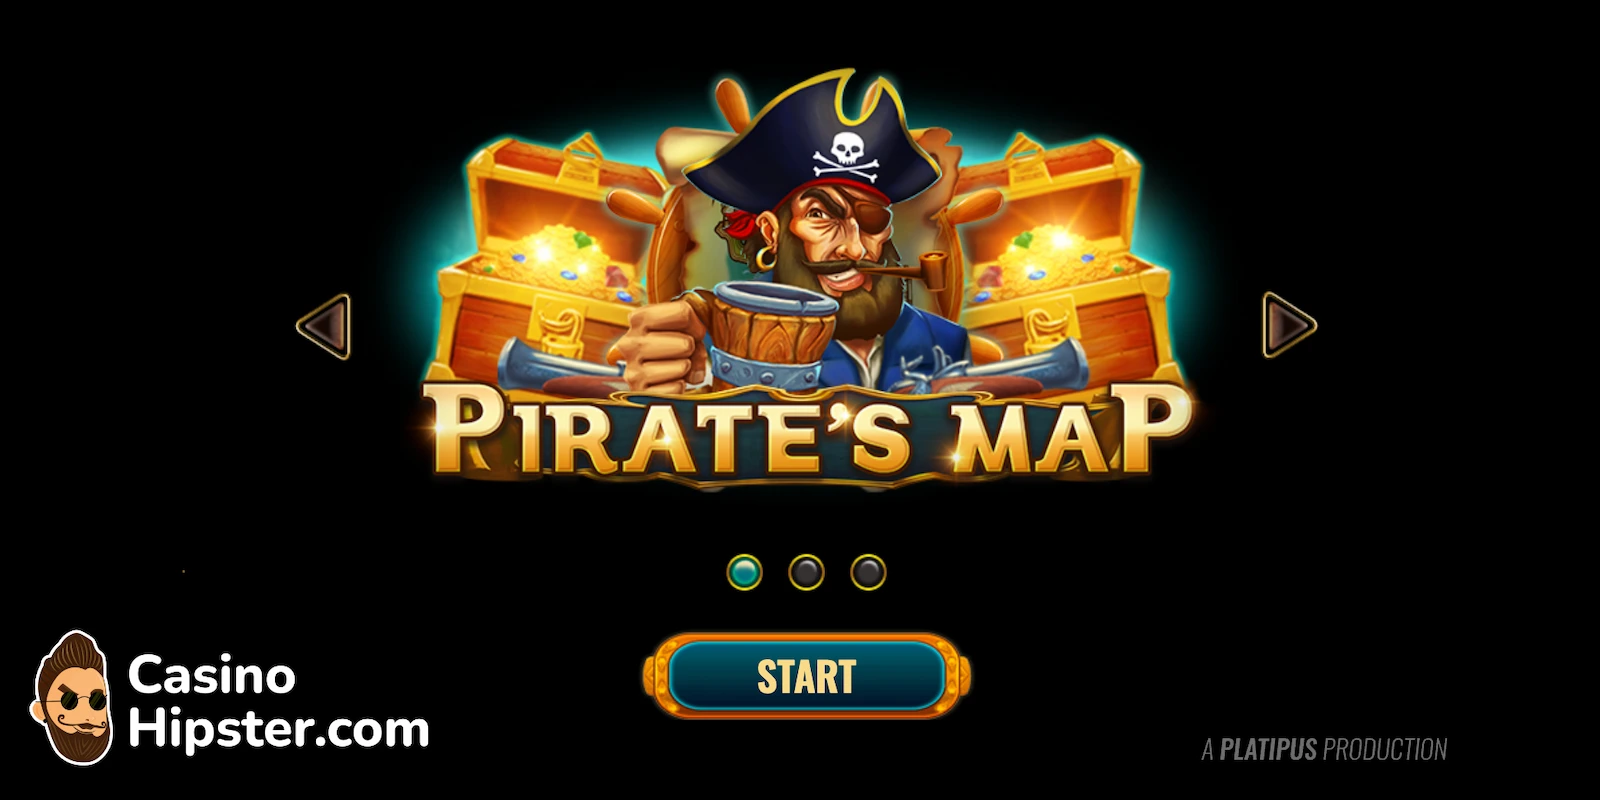 Pirates Map Slot Review